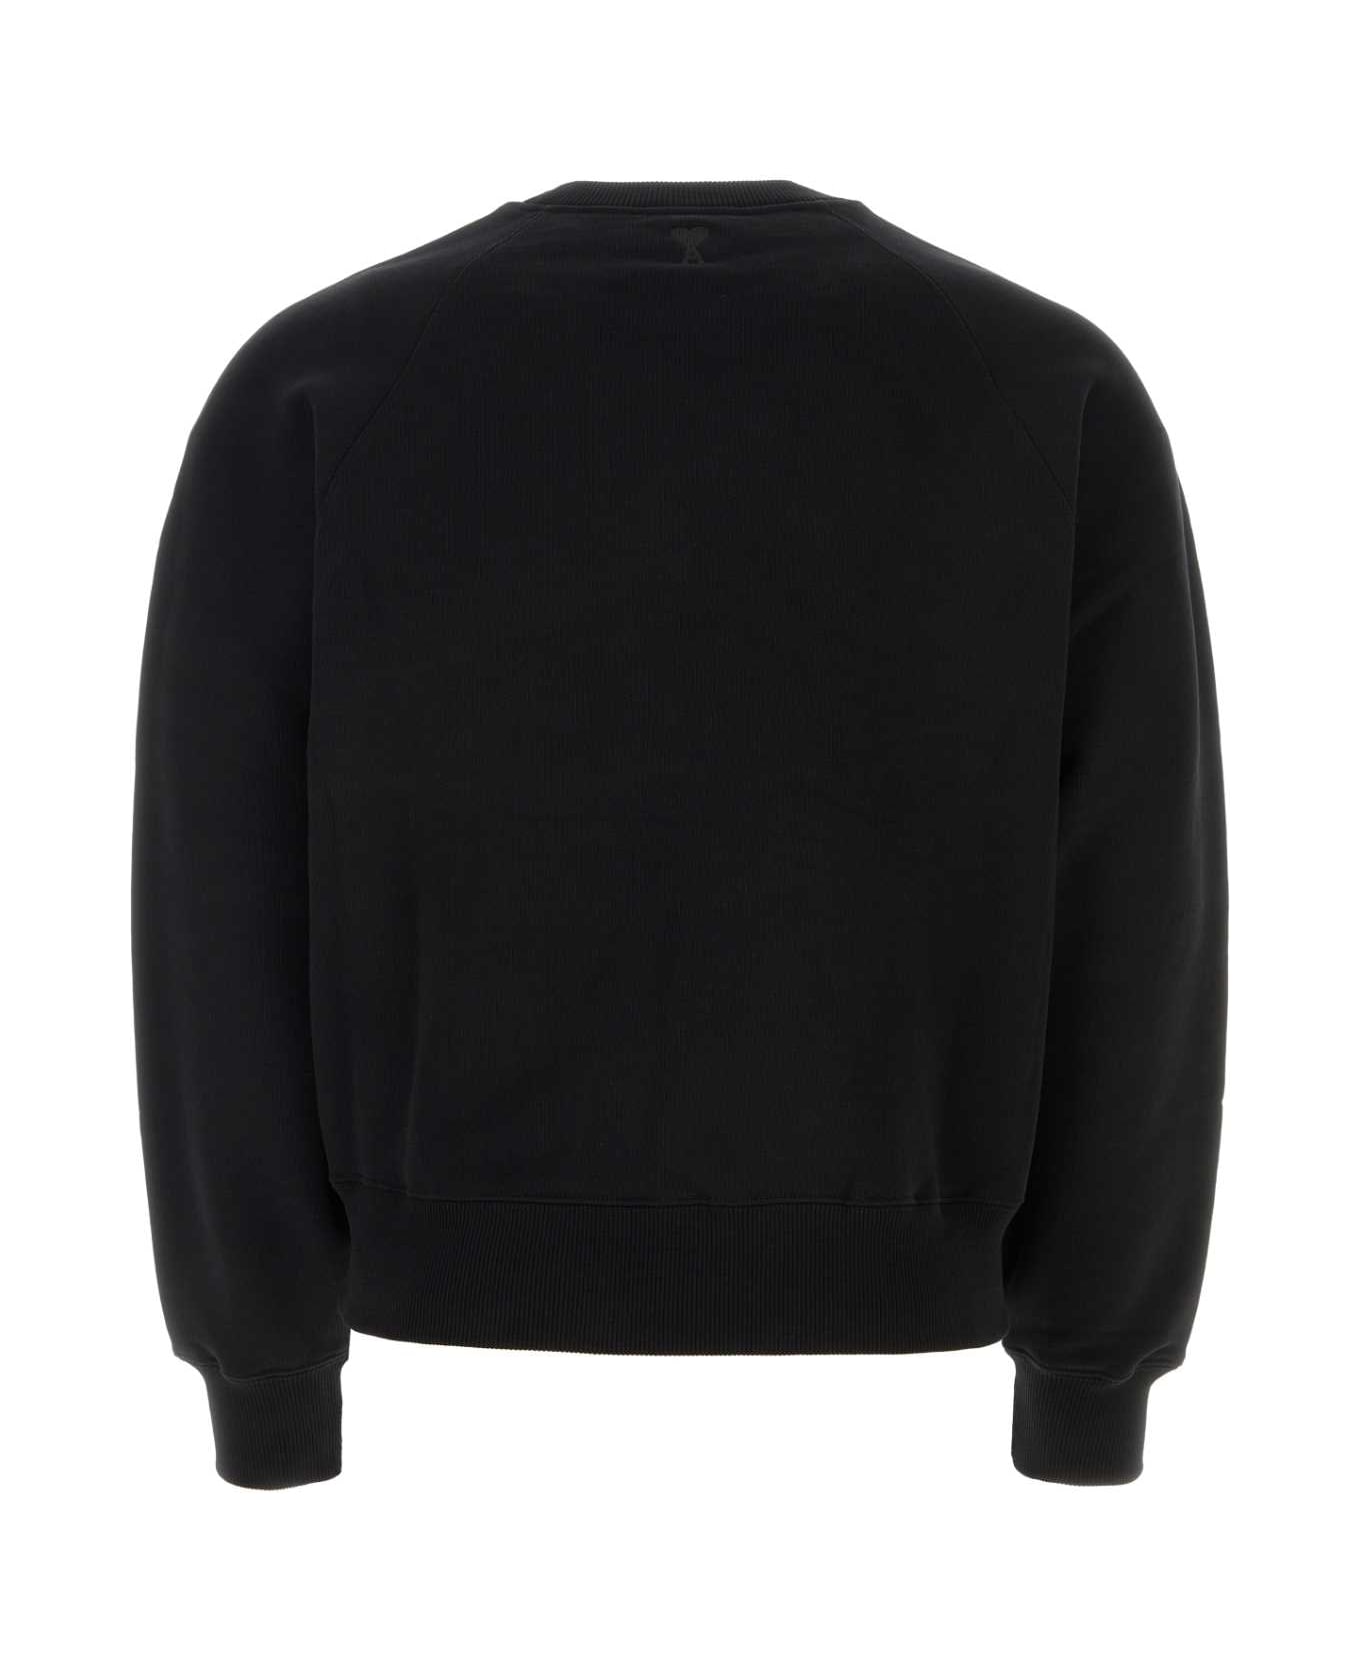 Ami Alexandre Mattiussi Black Stretch Cotton Sweatshirt - Black